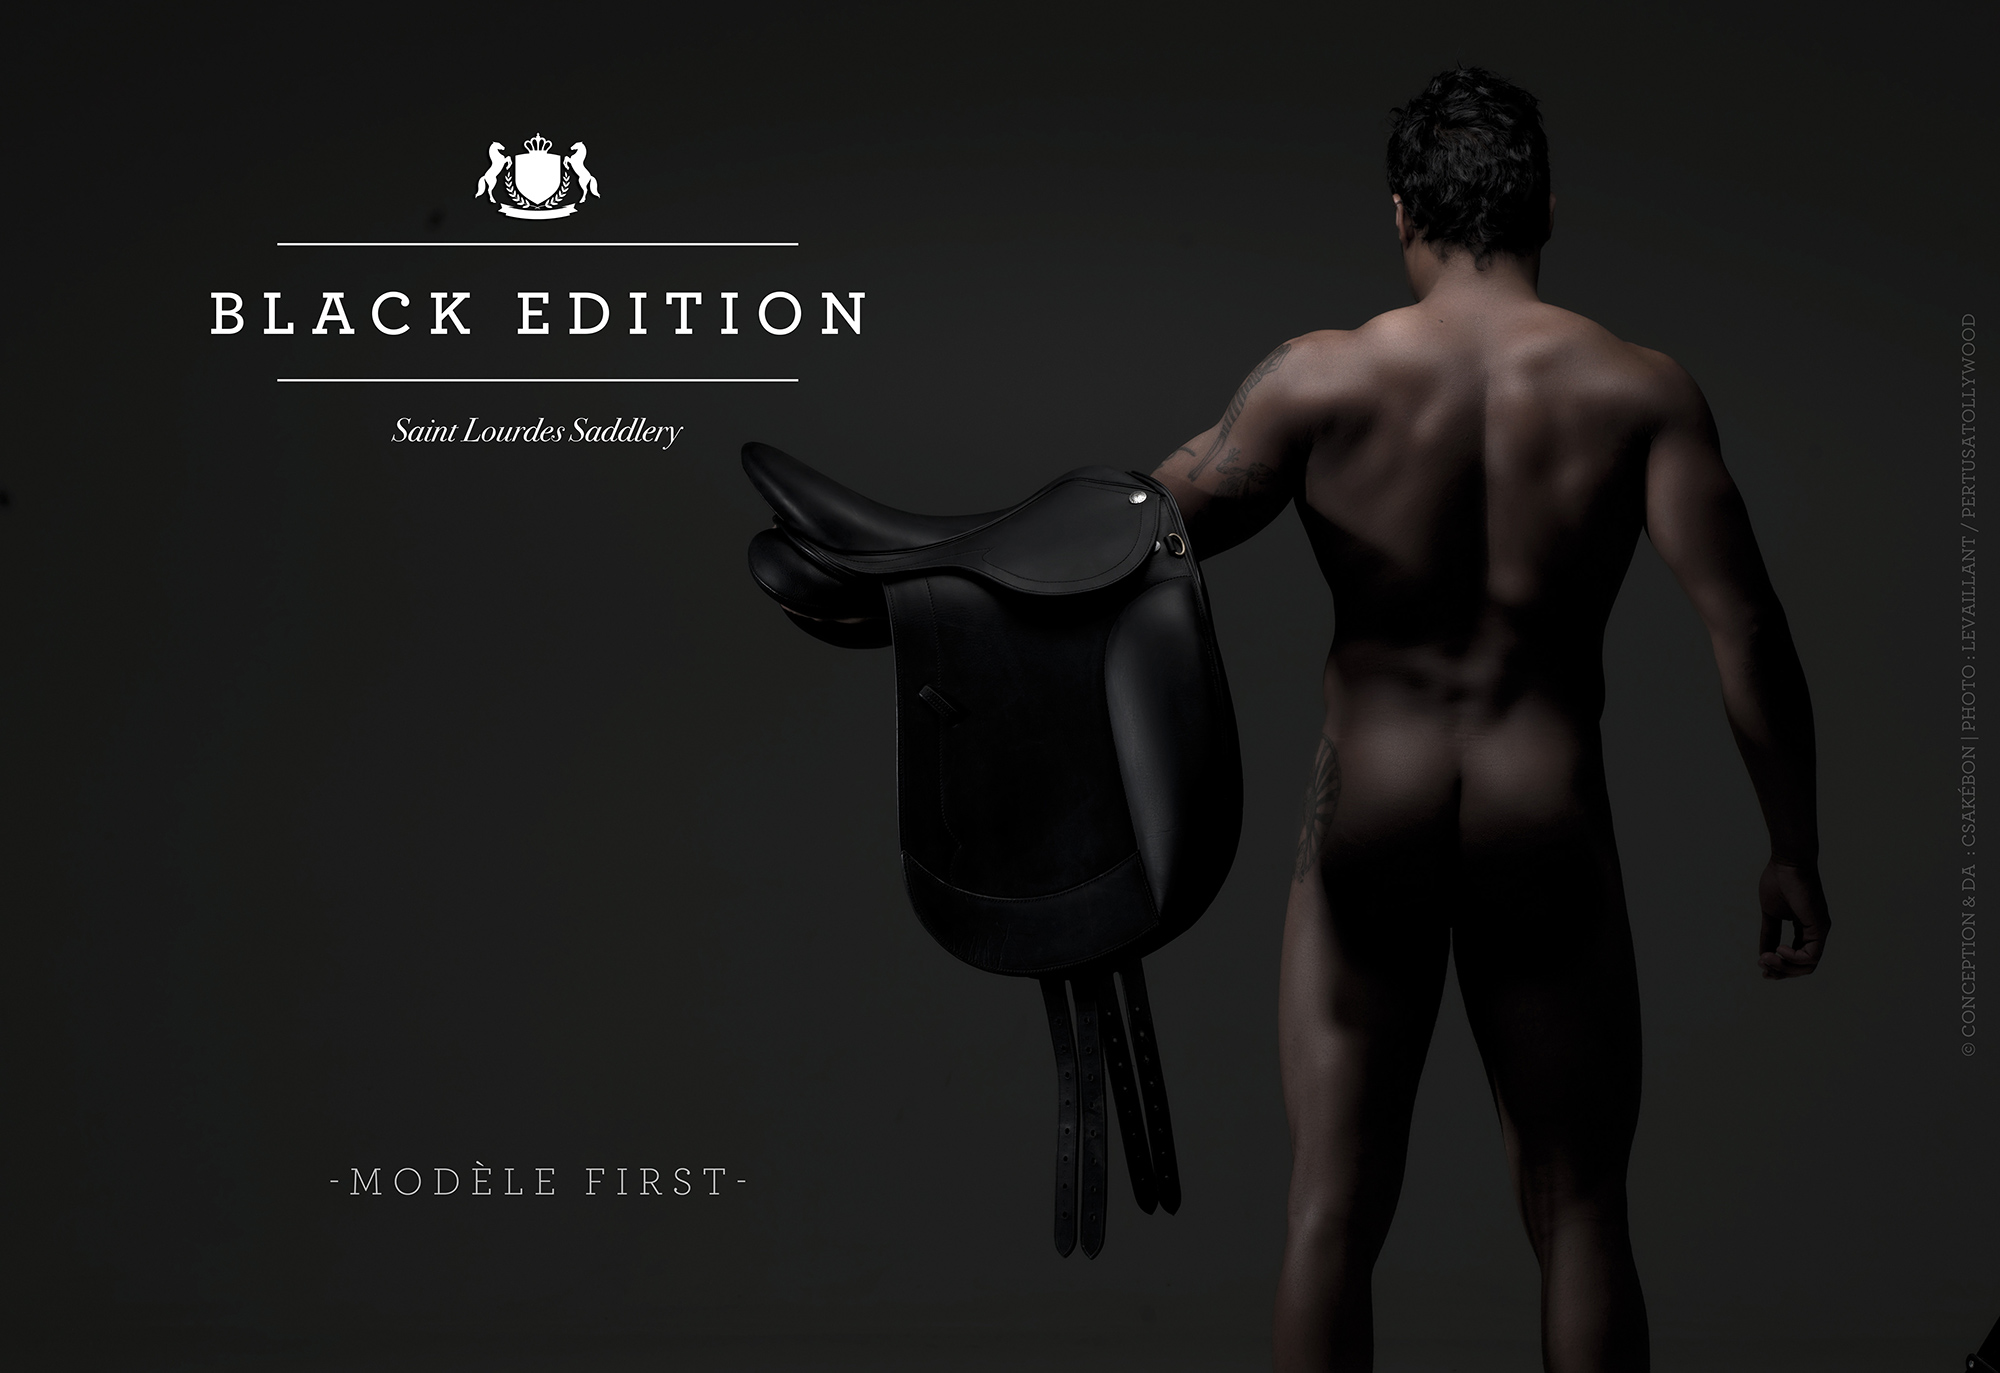 Csakébon - Black Edition - Saint Lourdes Saddlery - All rights reserved